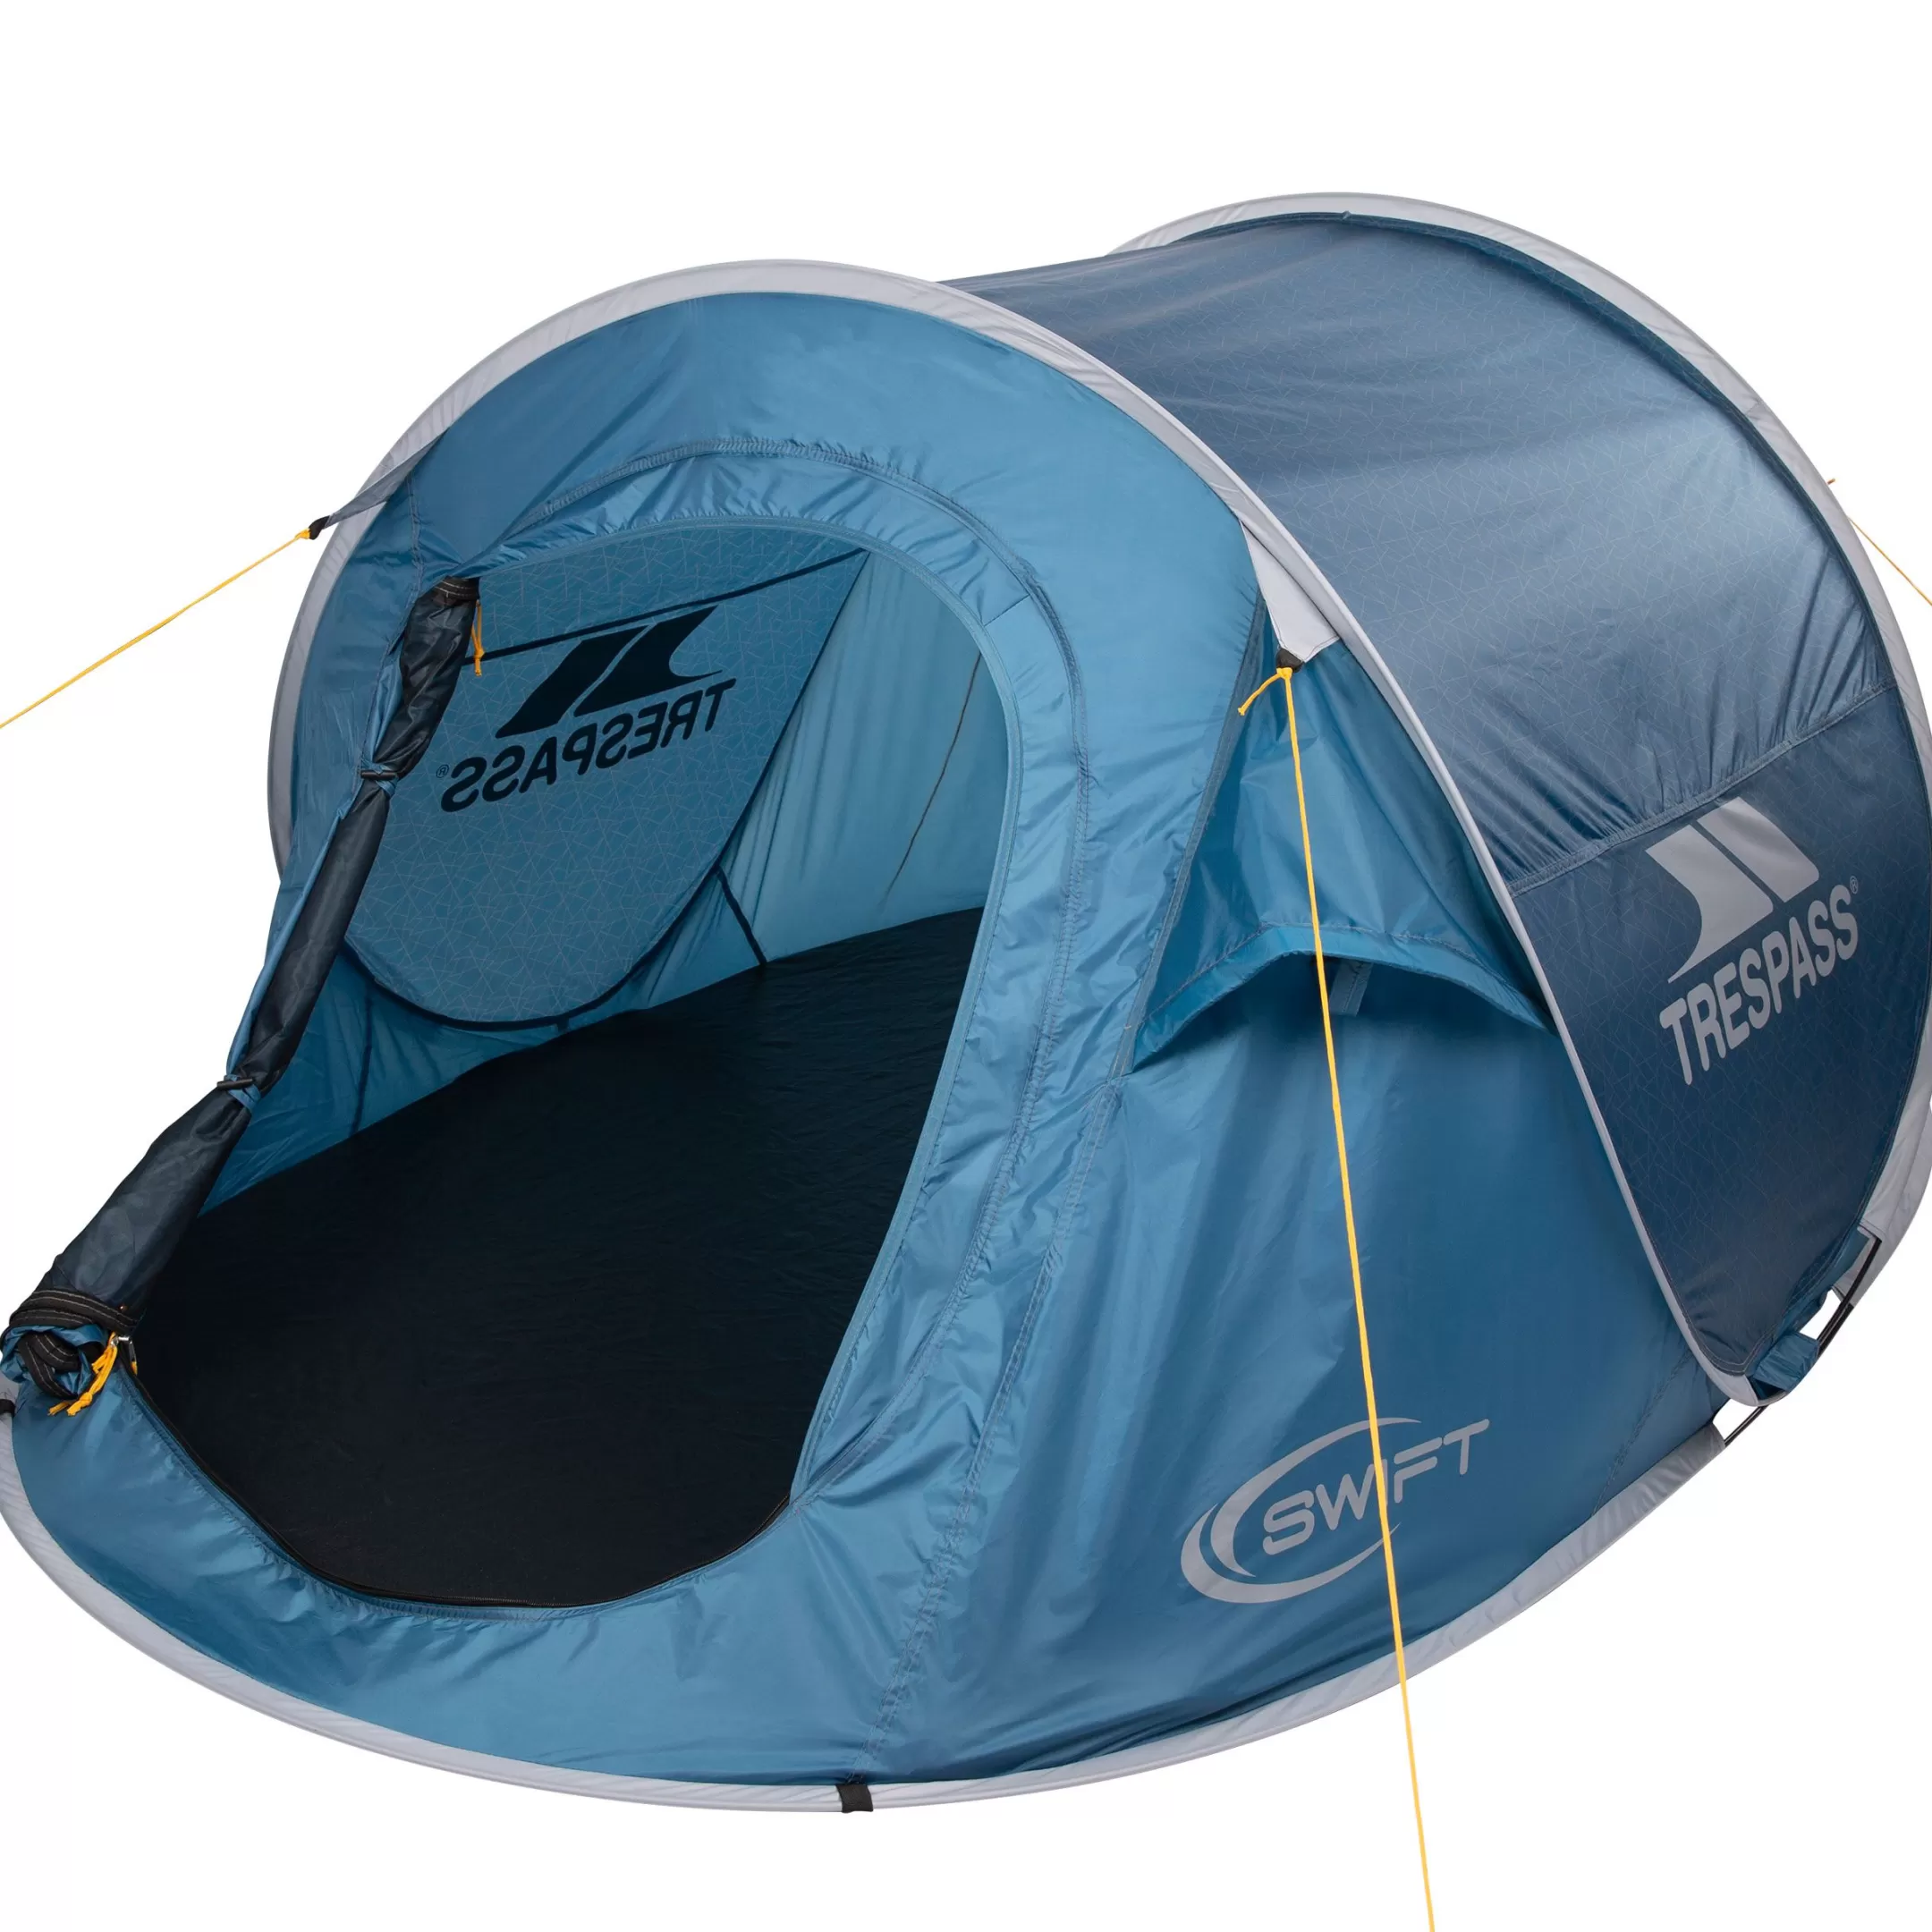 Waterproof 2 Man Pop Up Tent Patterned Swift2 | Trespass Clearance